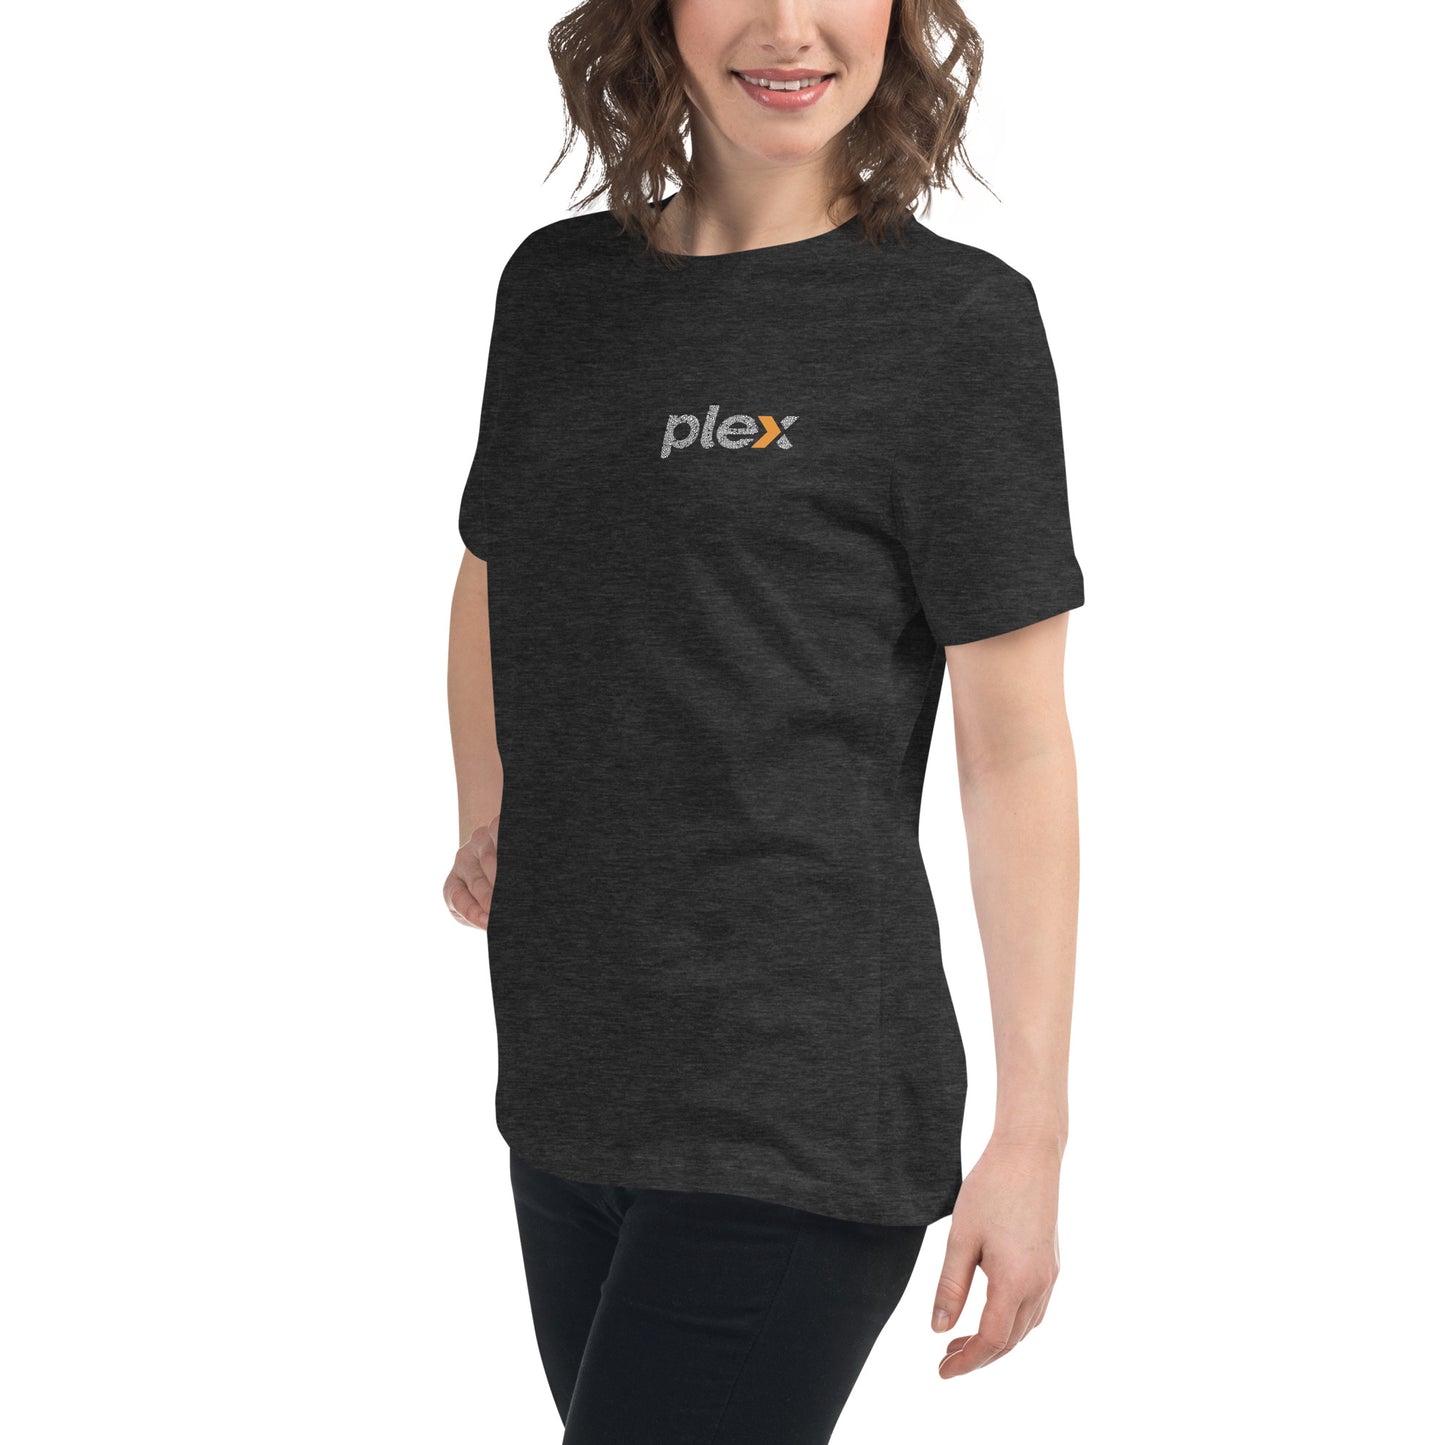 1 Billion Women's T-Shirt (Pocket Print)